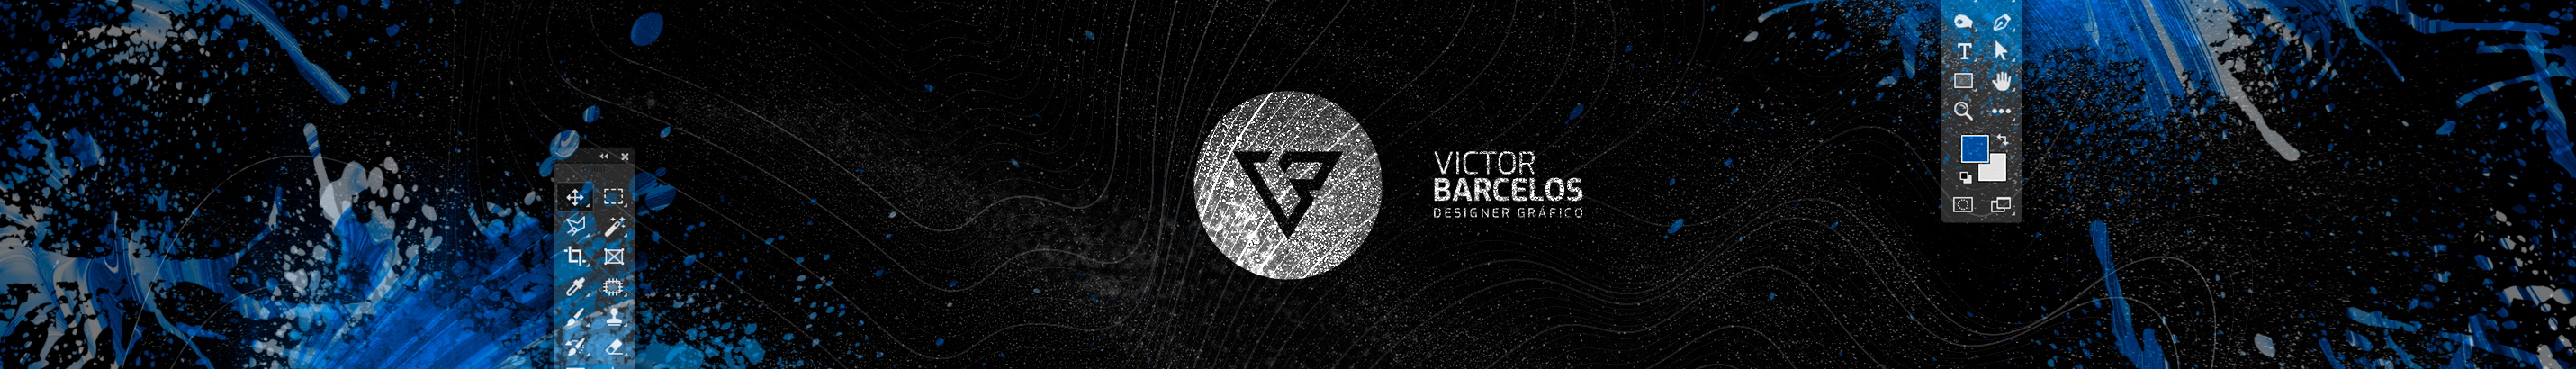 Victor Barcelos's profile banner